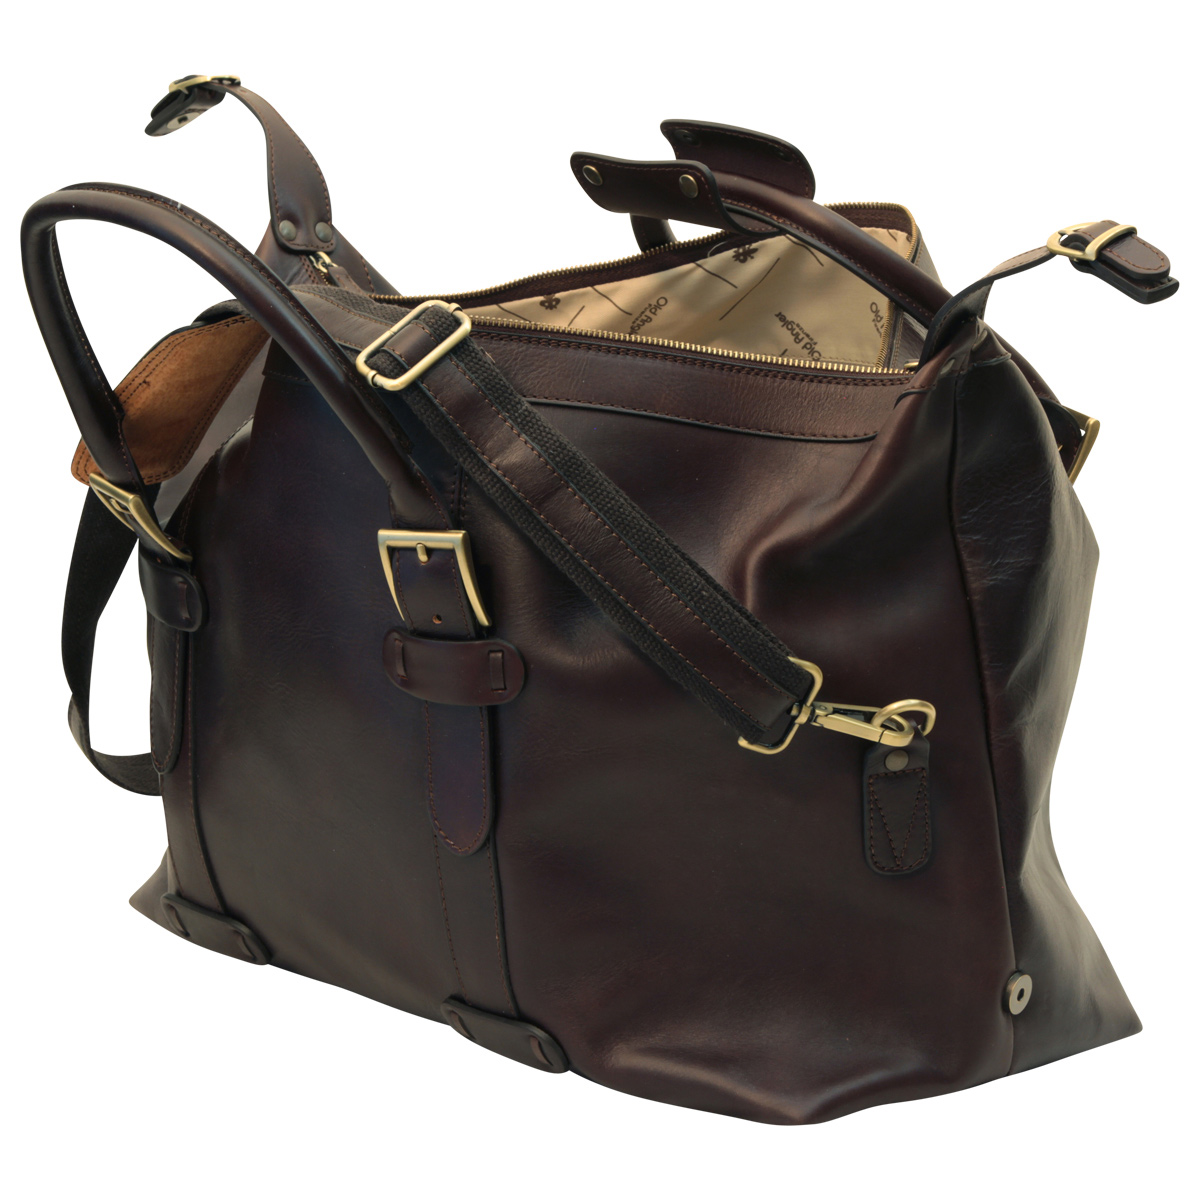 Cowhide leather Travel Bag - Dark Brown | 410689TM | EURO | Old Angler Firenze